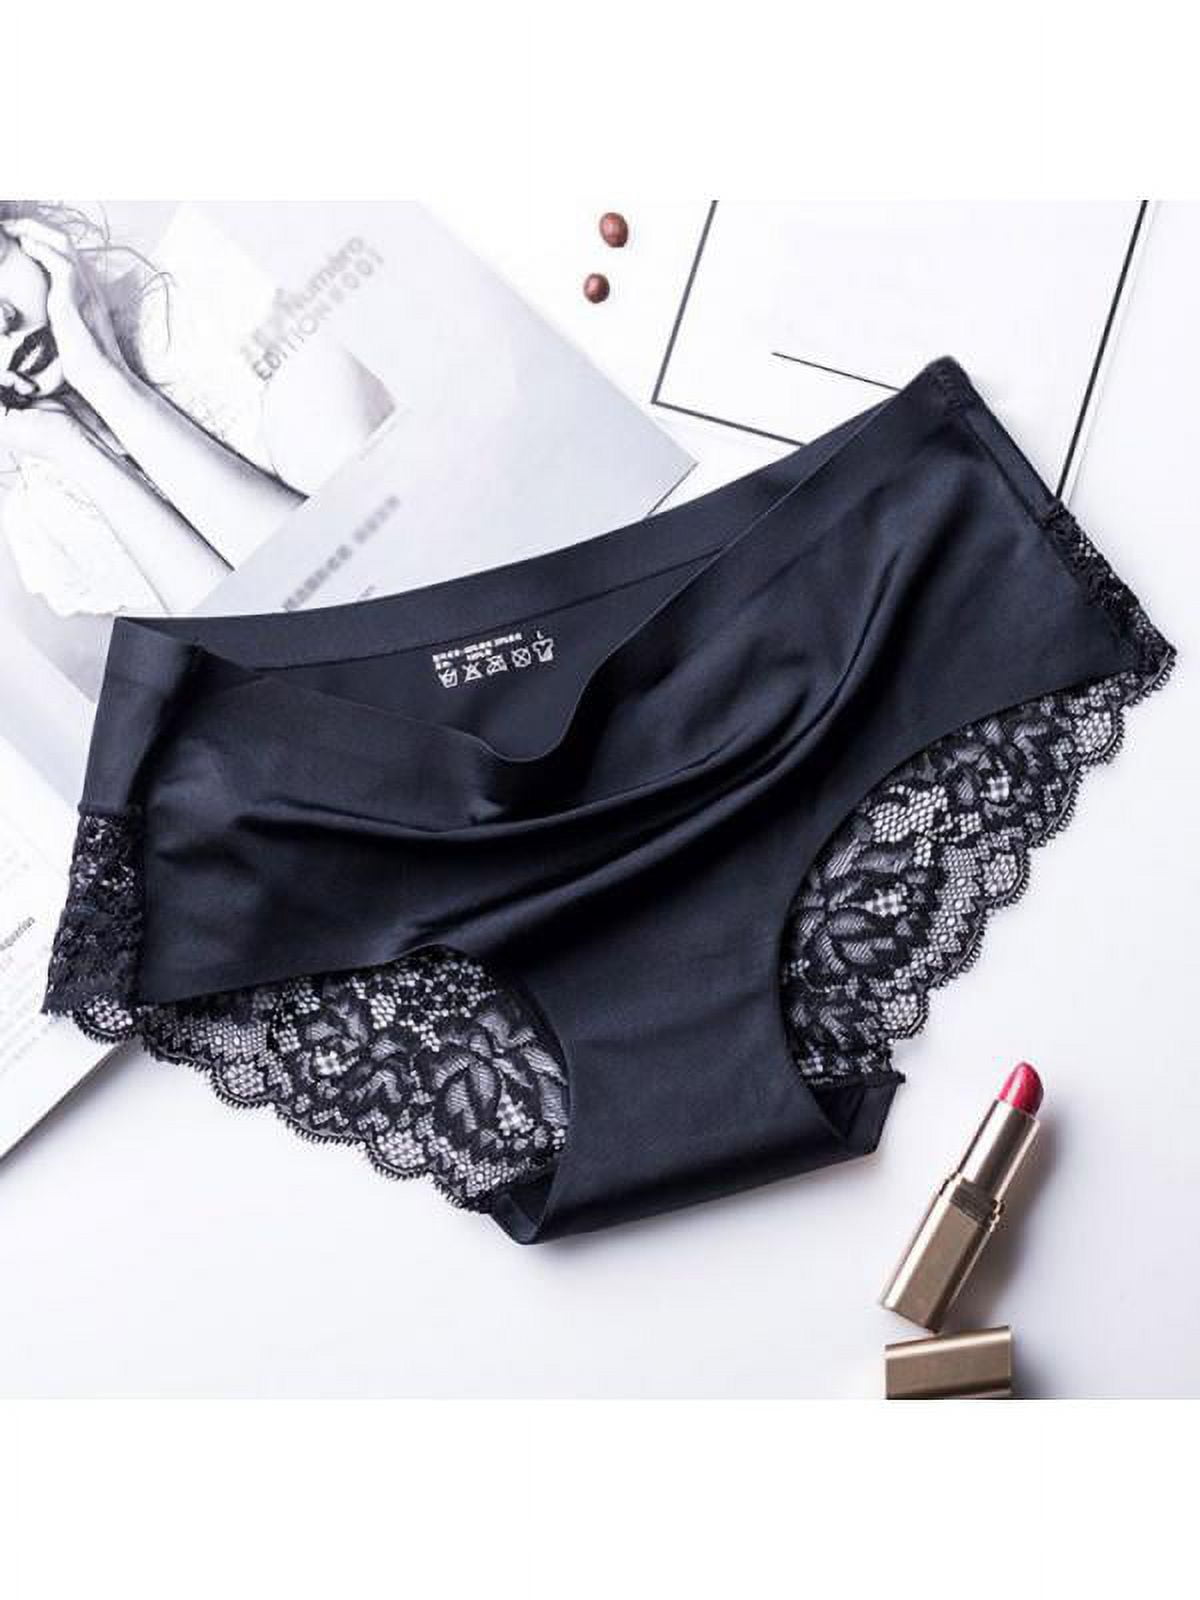 Women Seamless Underwear Sexy Lace Lingerie Knickers Ice Silk Panties Briefs